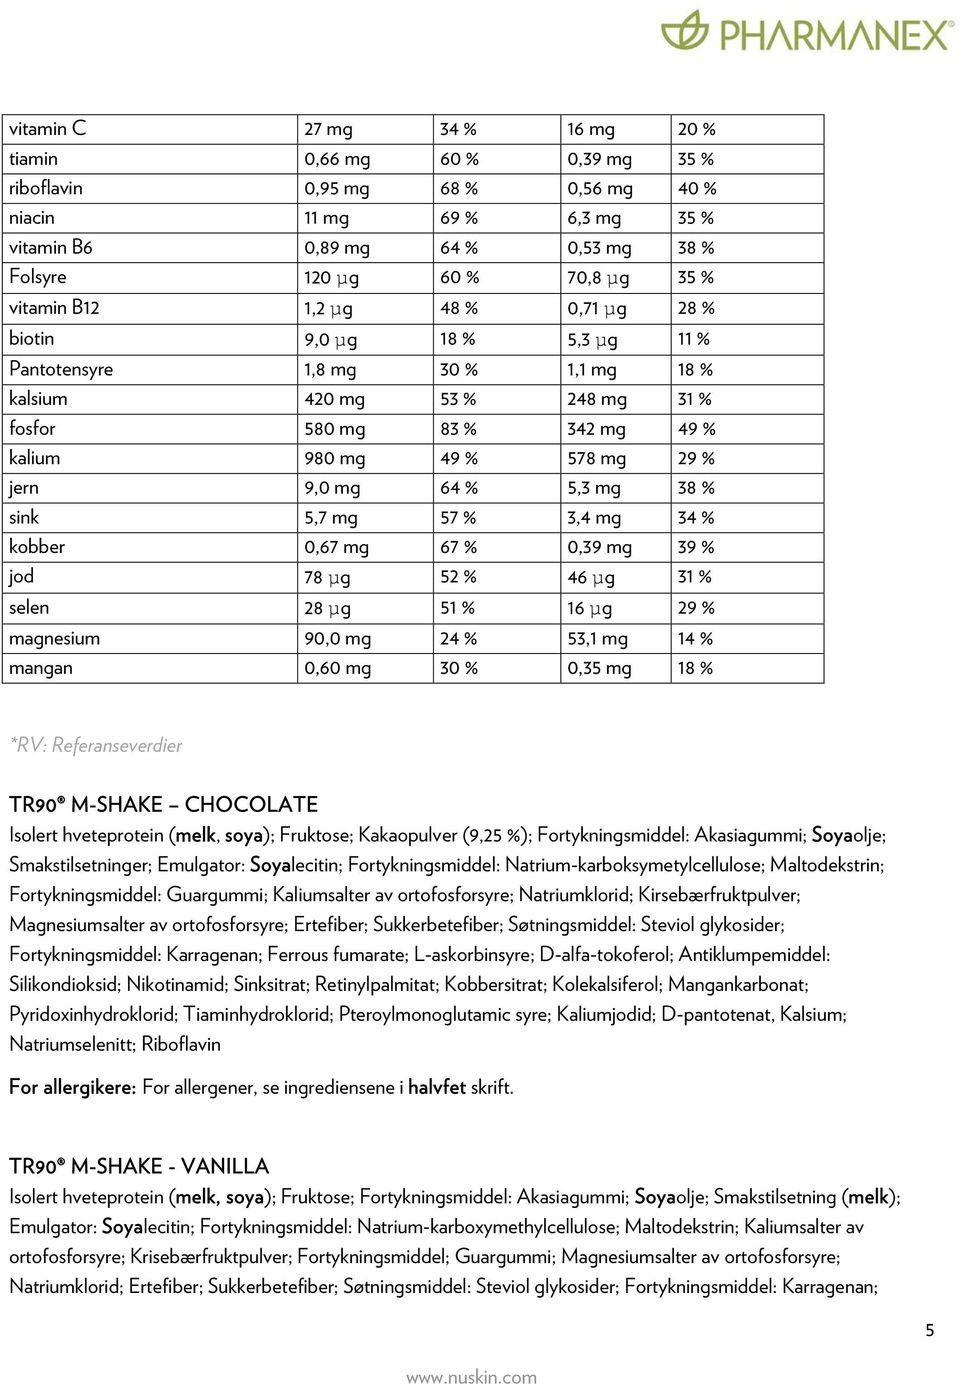 % jern 9,0 mg 64 % 5,3 mg 38 % sink 5,7 mg 57 % 3,4 mg 34 % kobber 0,67 mg 67 % 0,39 mg 39 % jod 78 µg 52 % 46 µg 31 % selen 28 µg 51 % 16 µg 29 % magnesium 90,0 mg 24 % 53,1 mg 14 % mangan 0,60 mg